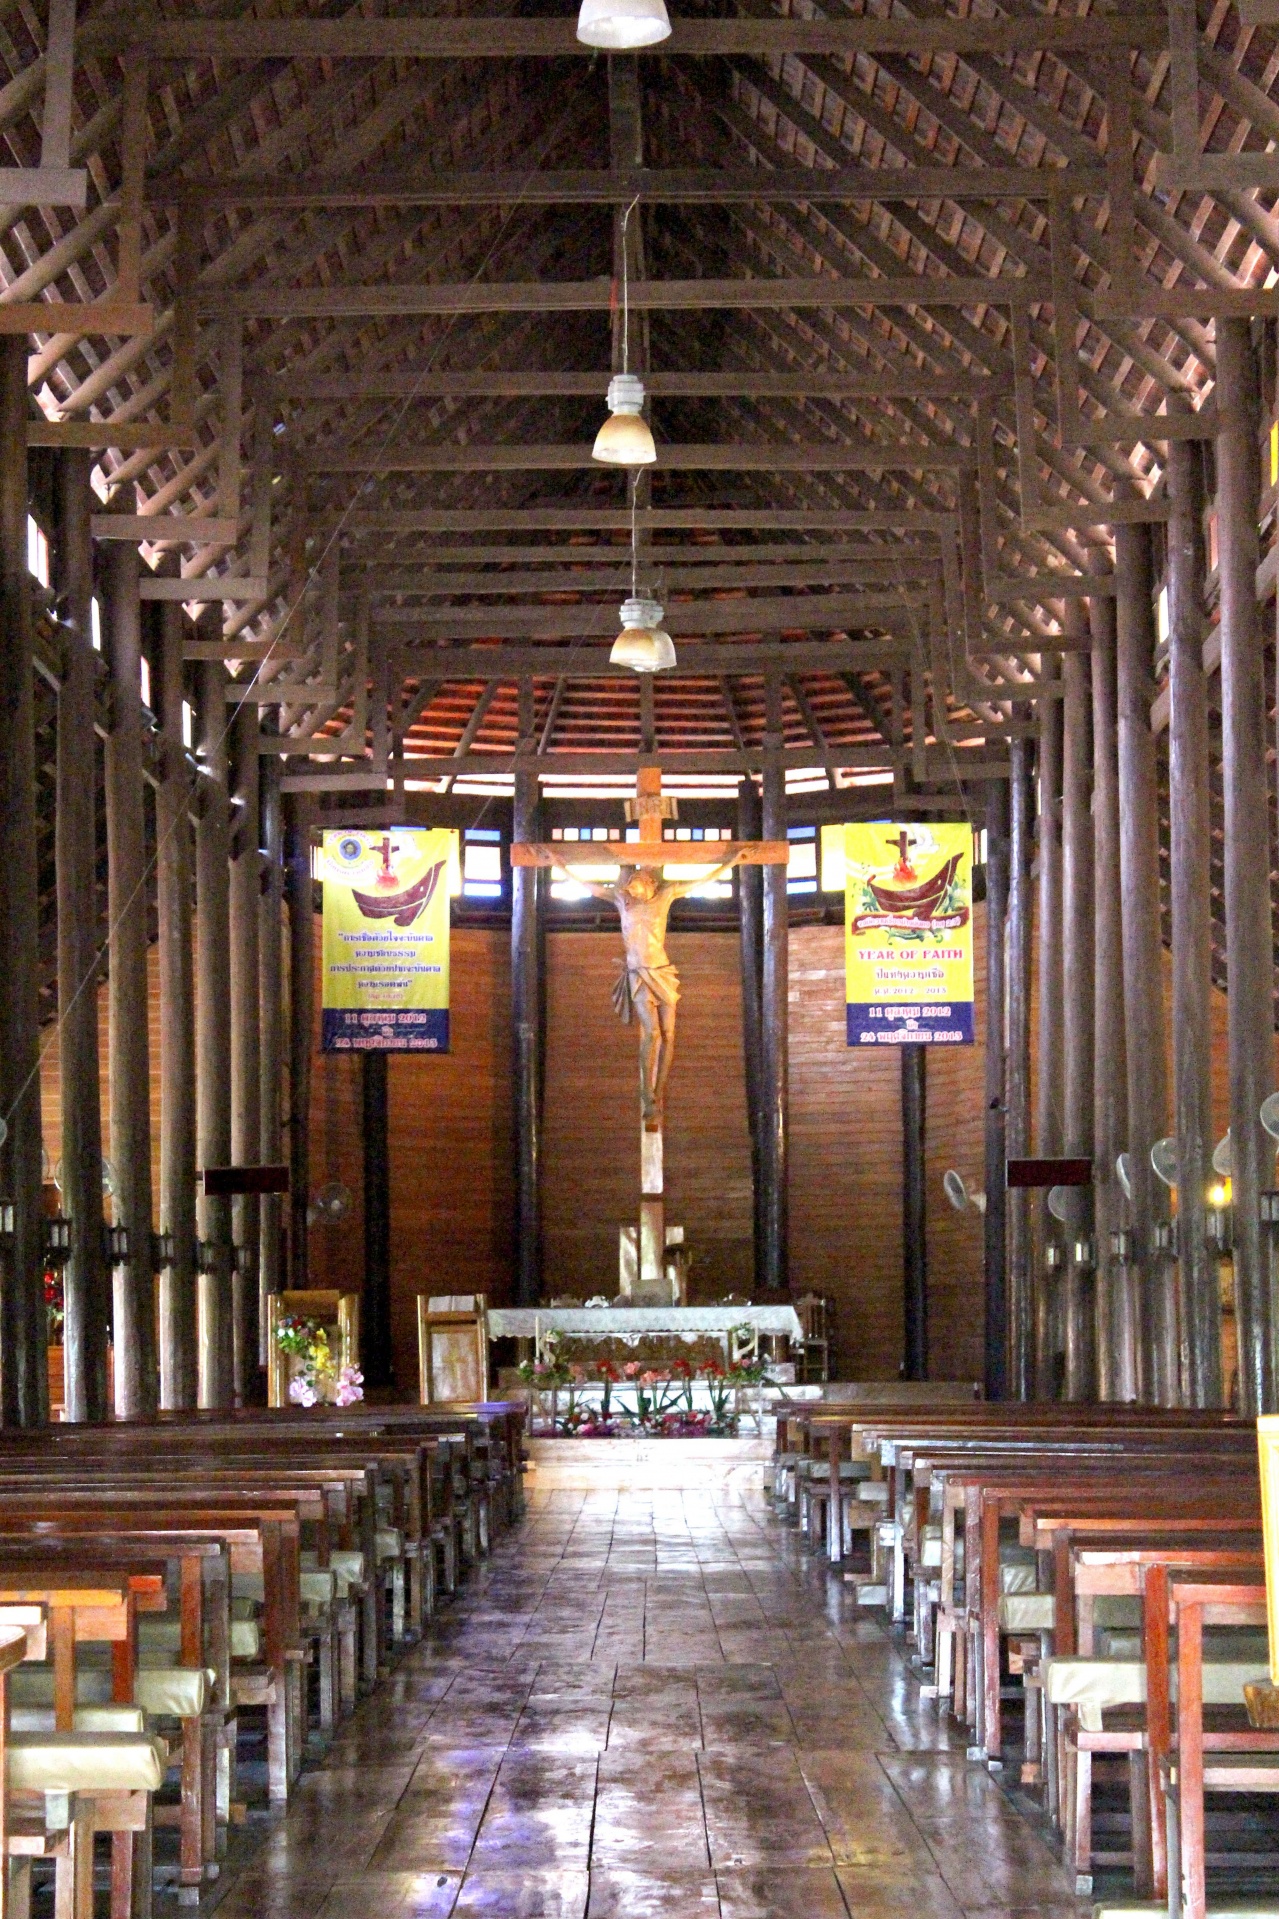 Iglesia de madera Yasothon Tailandia